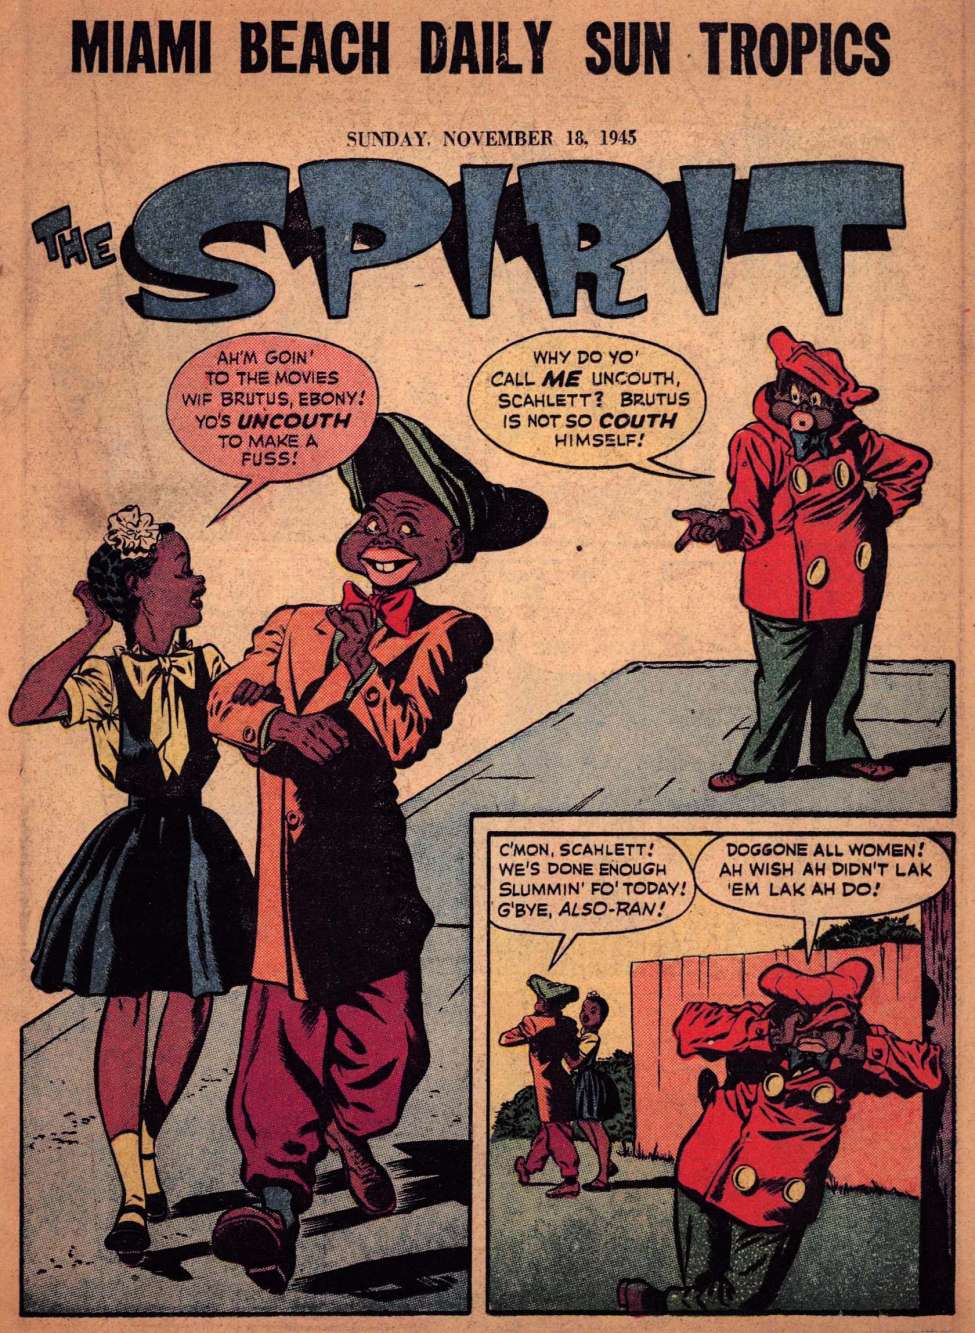 Comic Book Cover For The Spirit (1945-11-18) - Miami Beach Daily Sun - Version 1